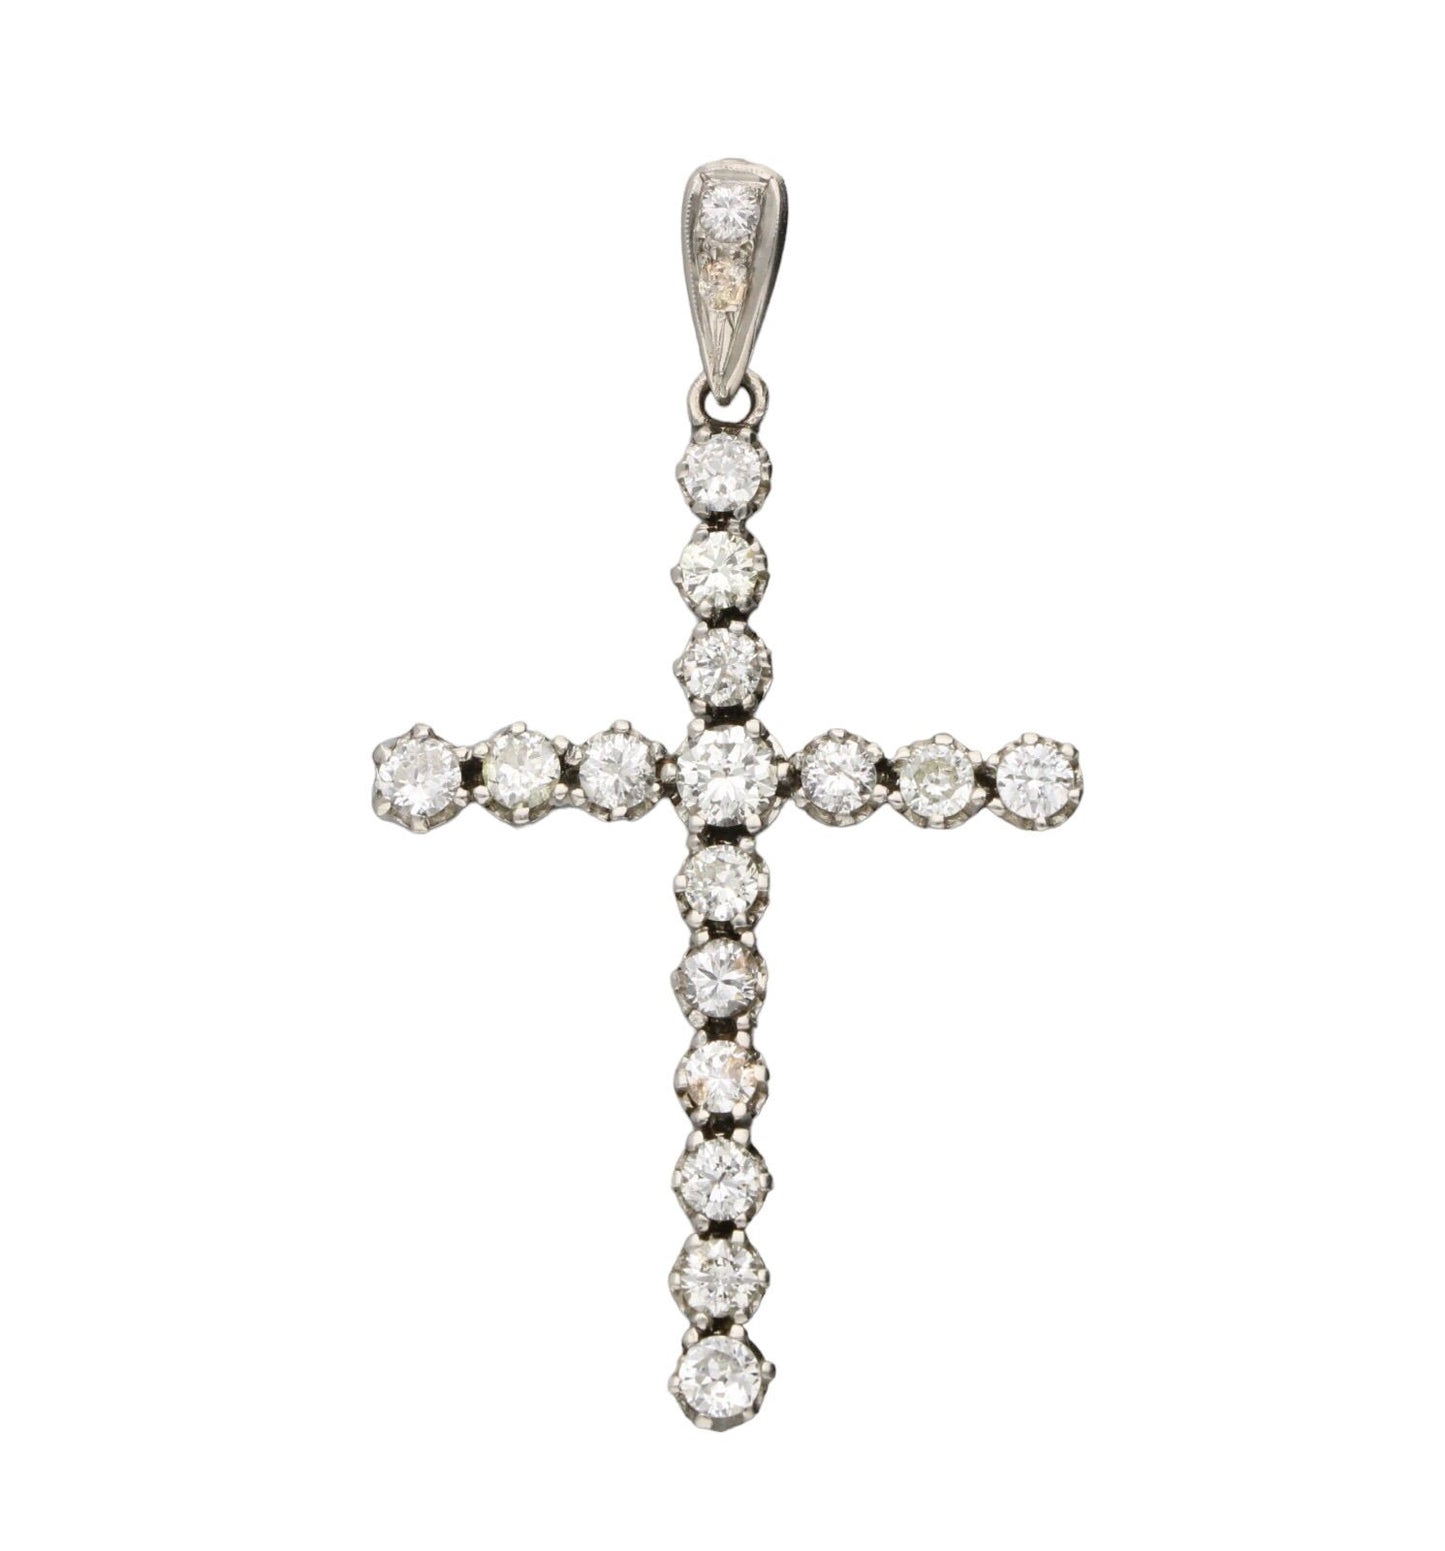 Diamond-set cross pendant